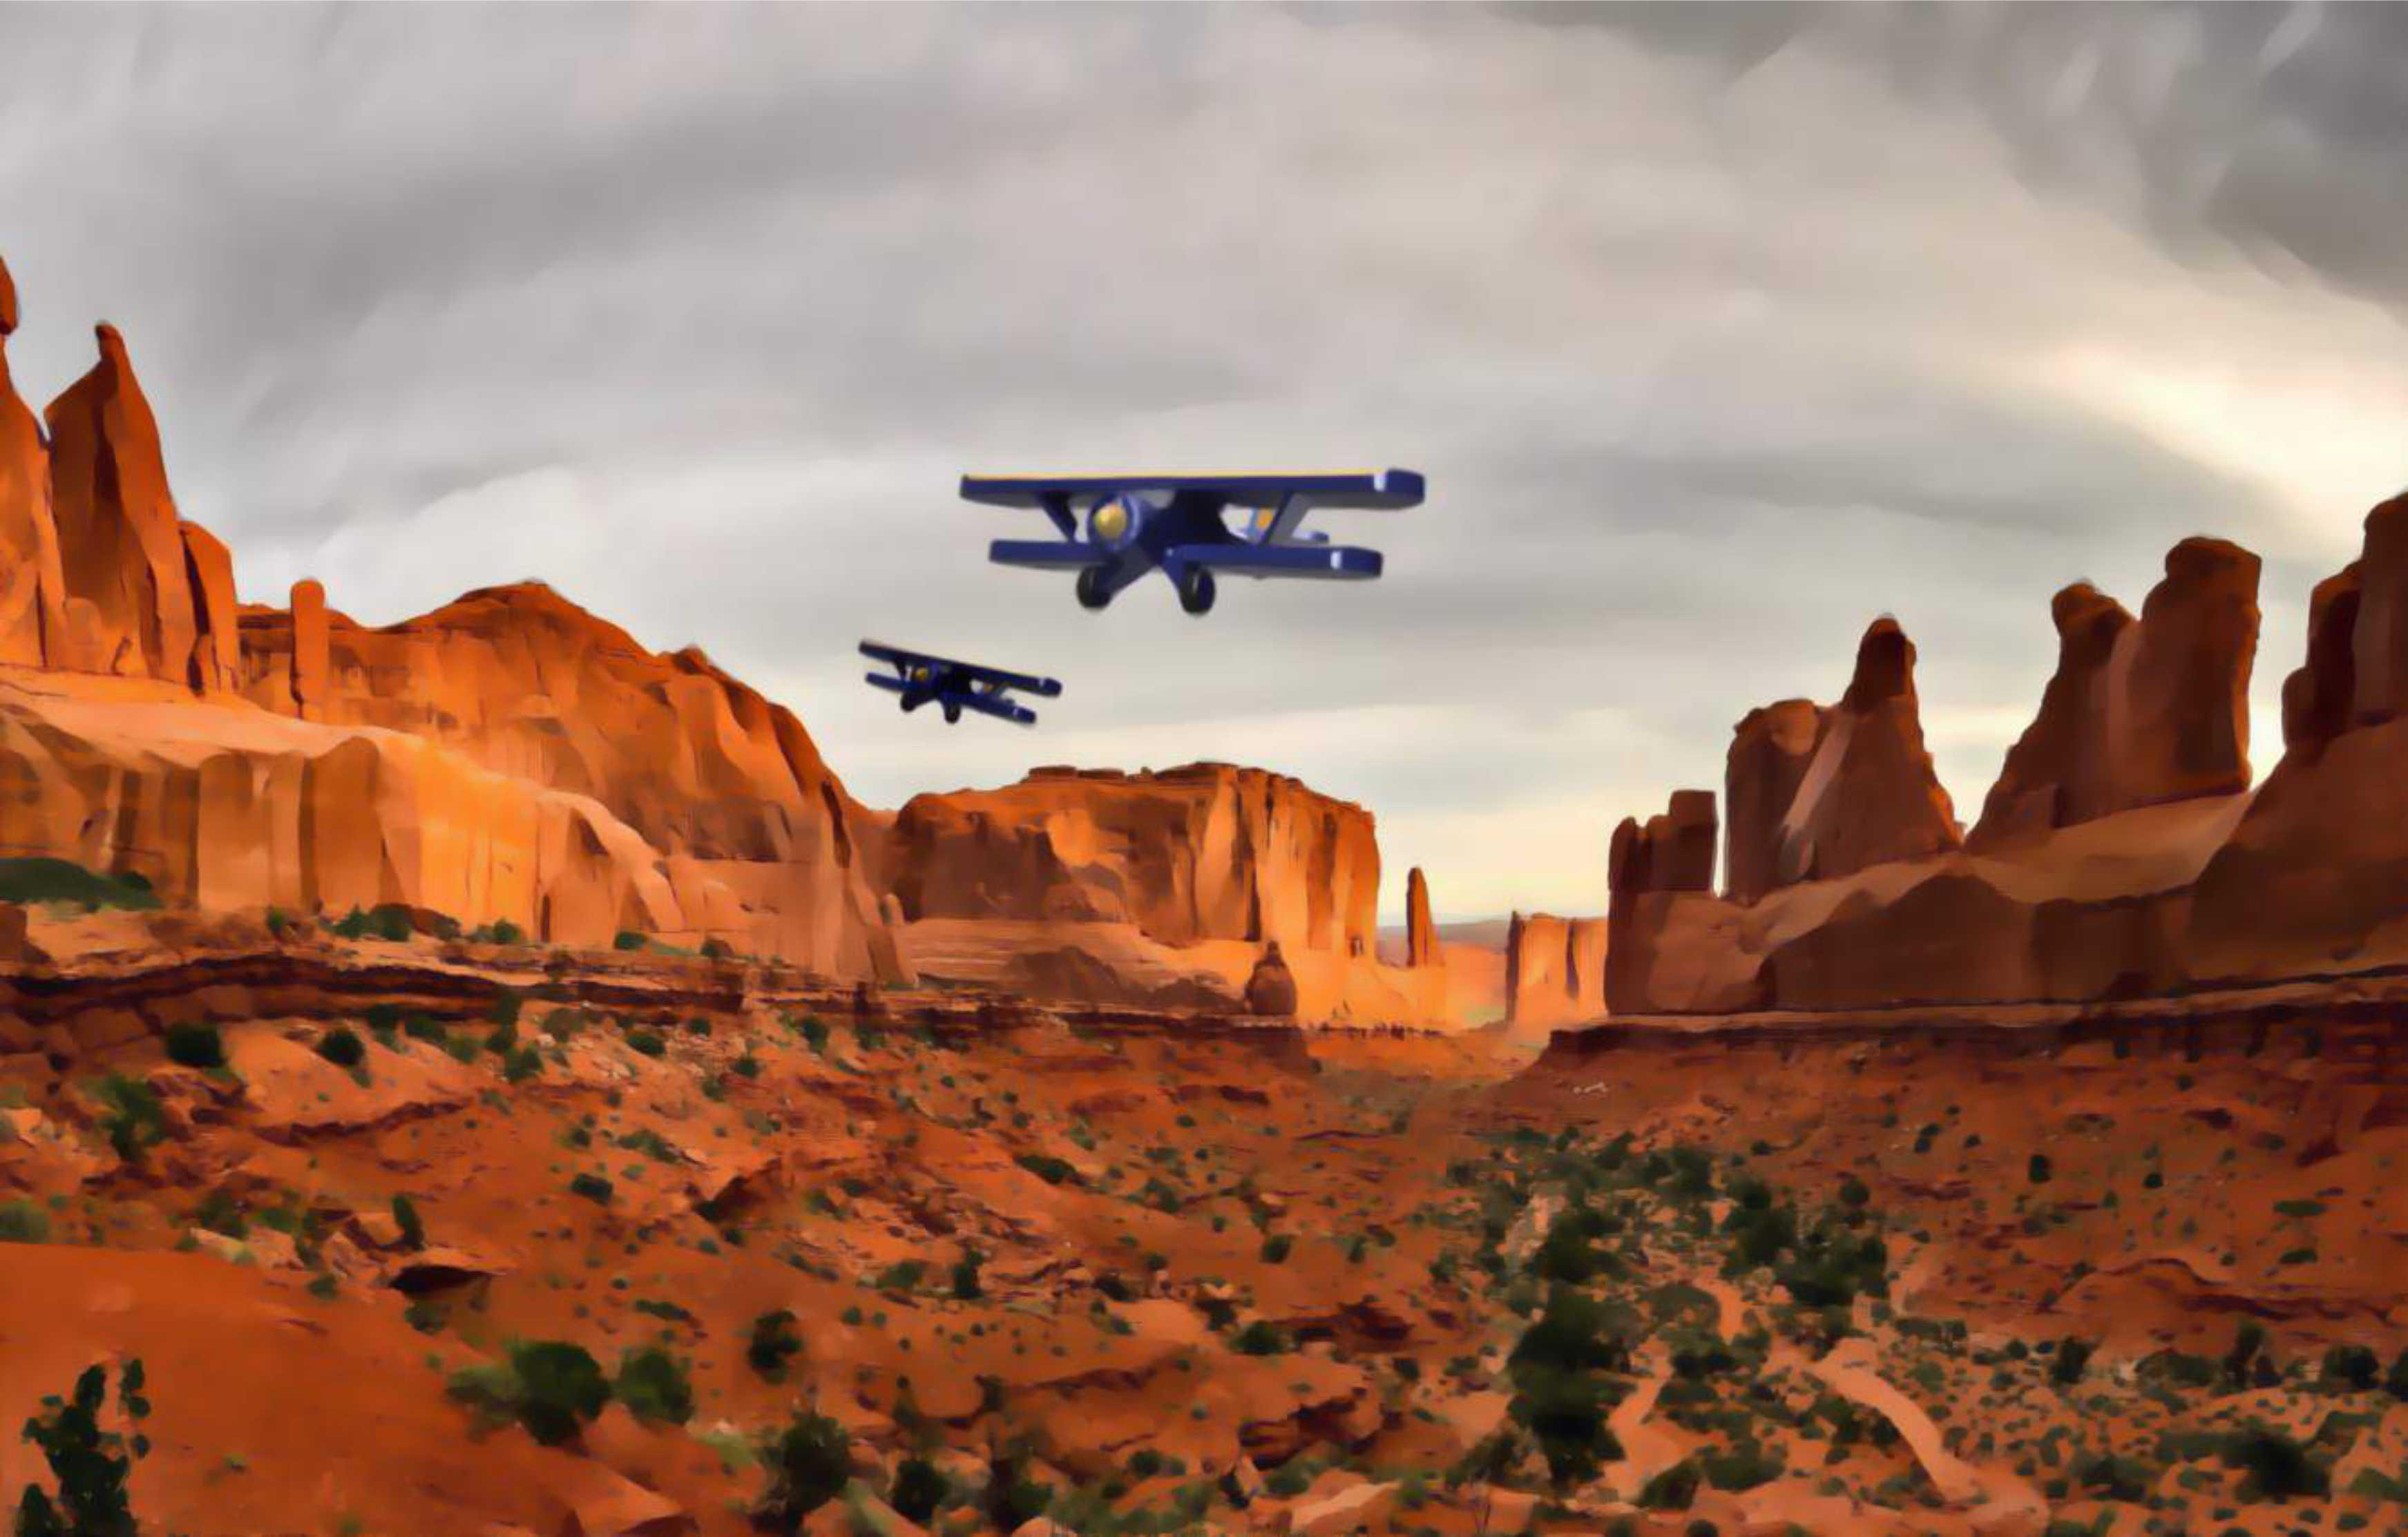 Air Mail Mavericks - open source tabletop adventure game 3d model